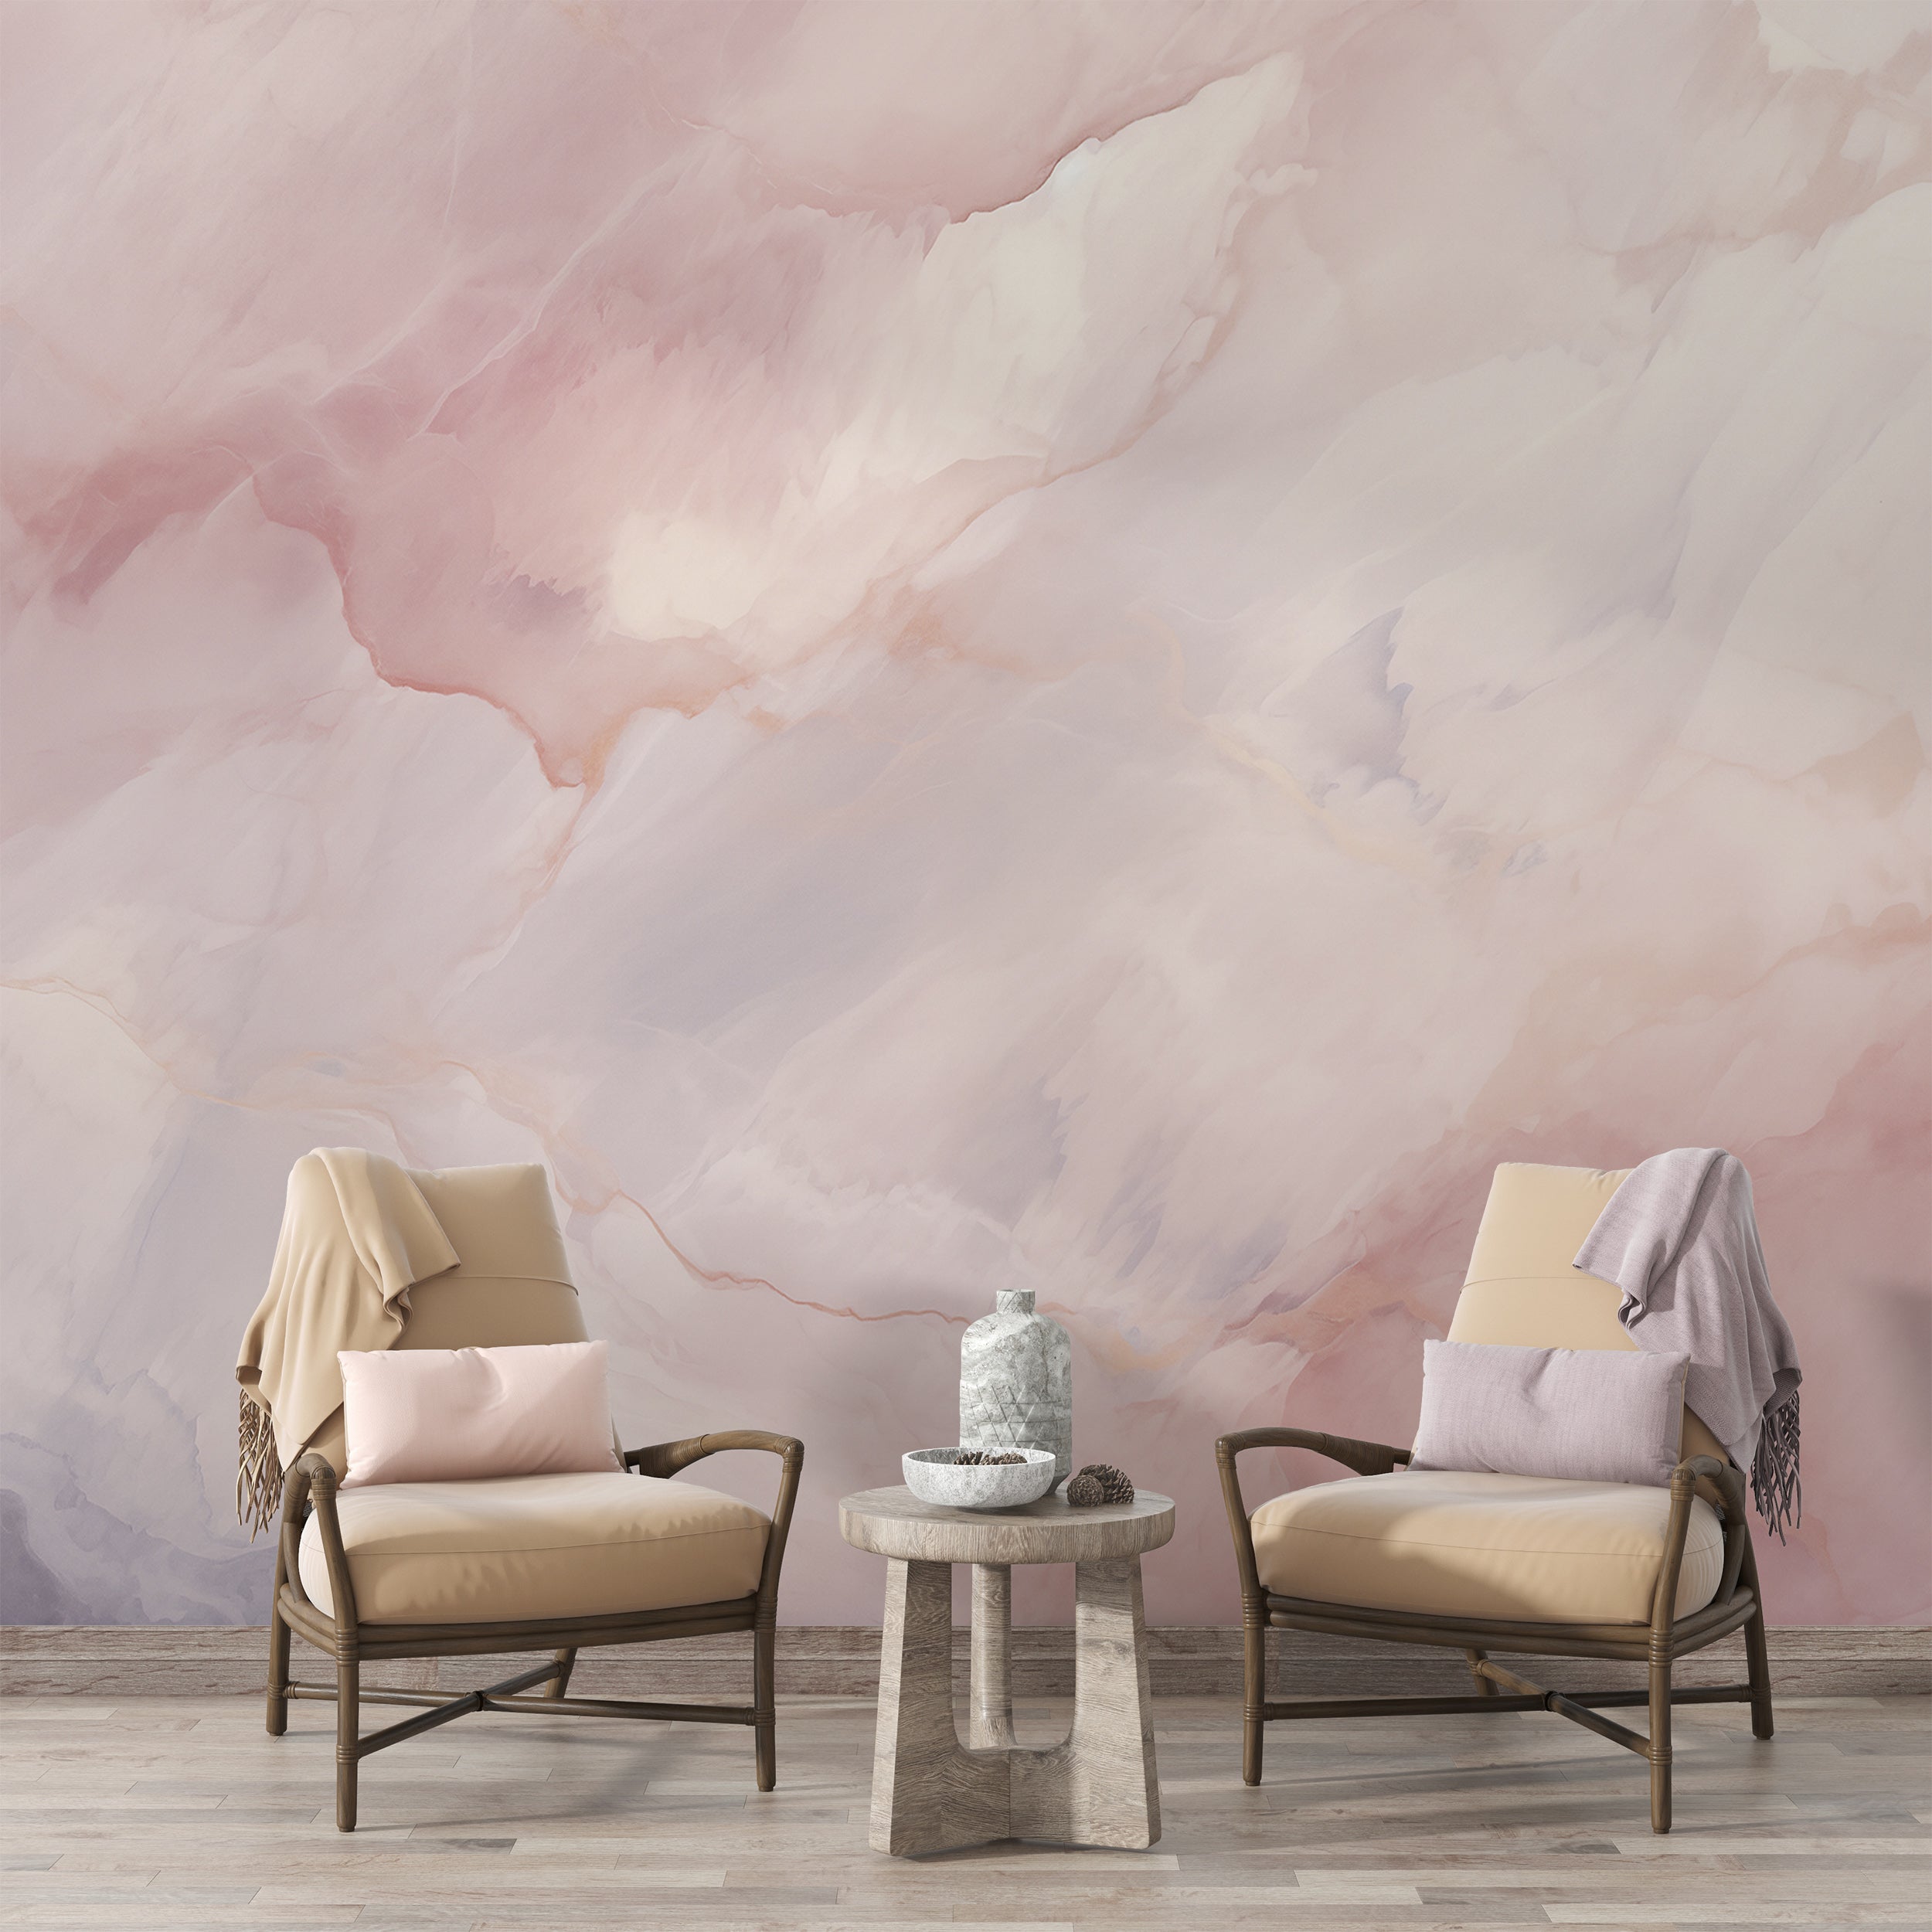 Soft Pink Marble Texture Wallpaper for Elegant Decor